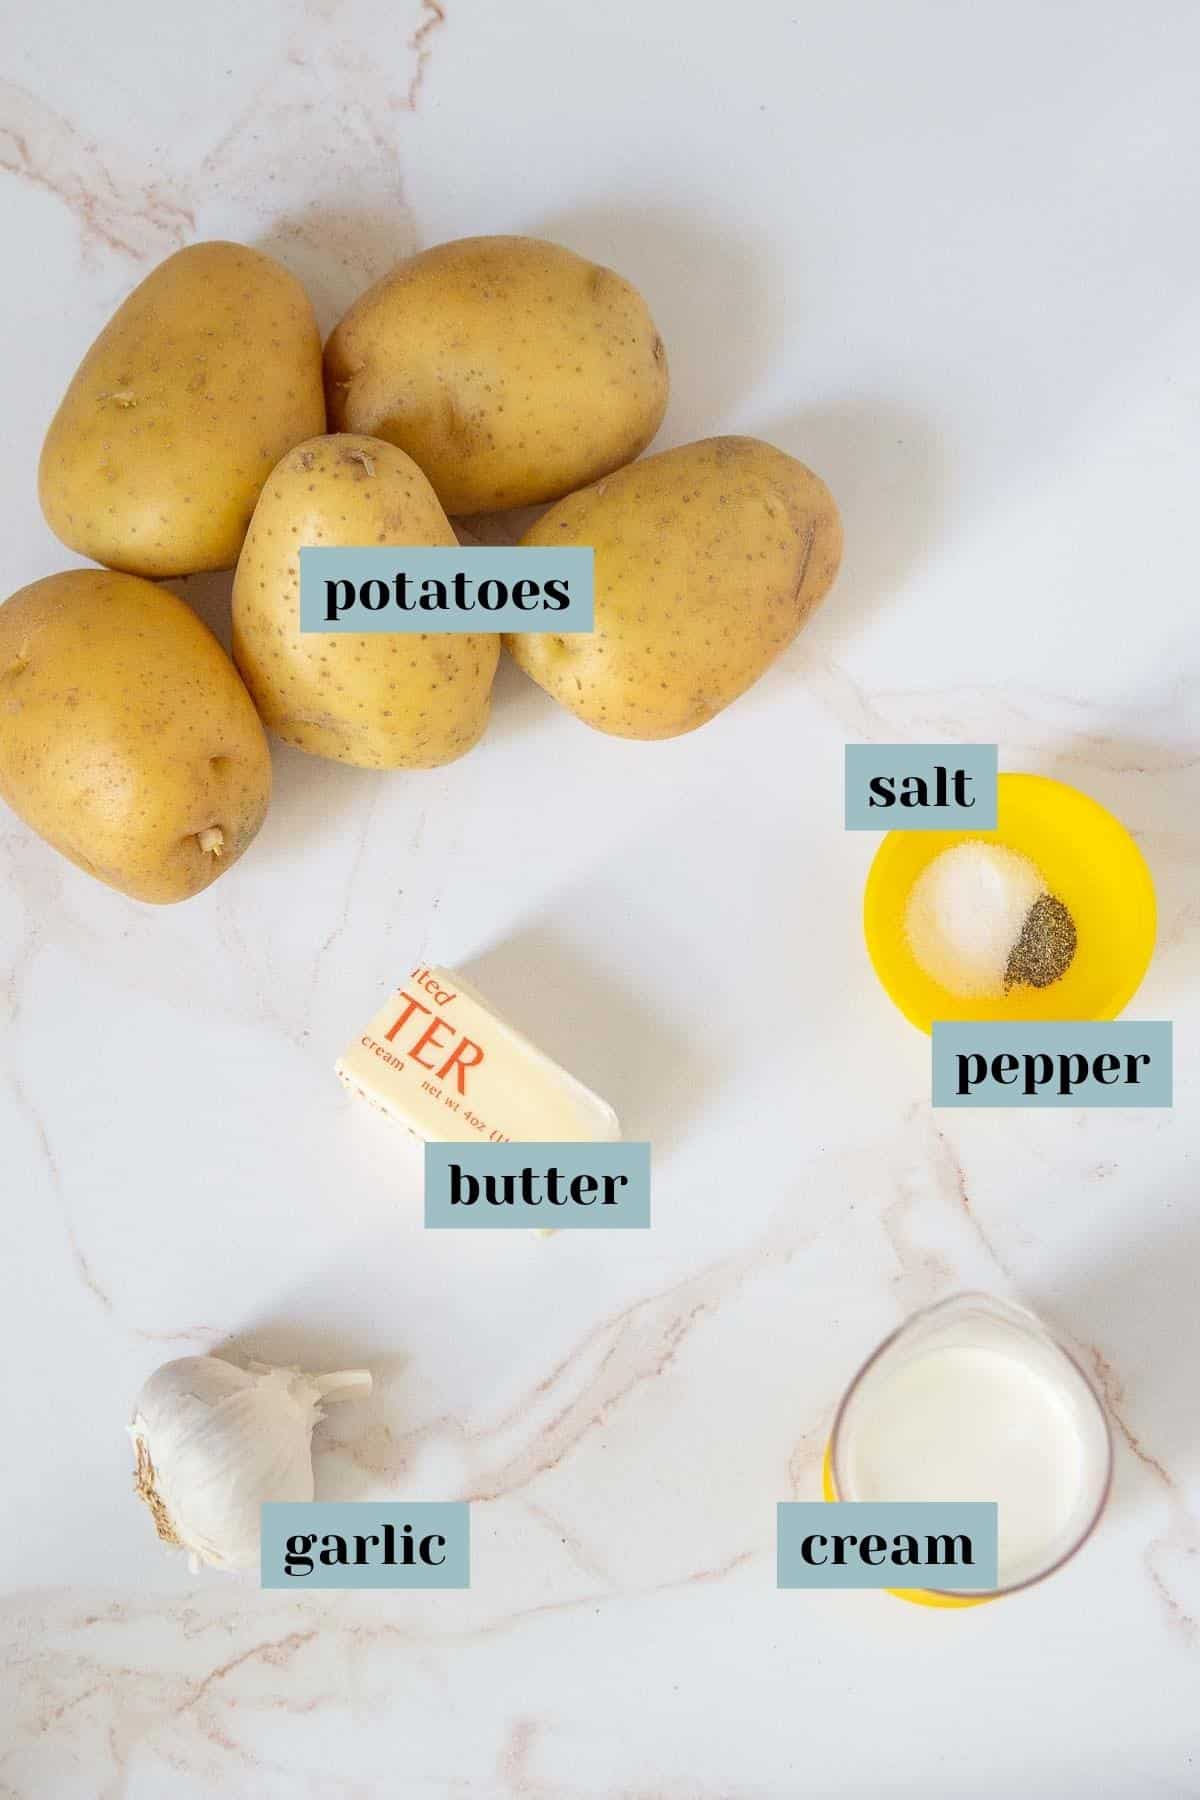 garlic mashed potatoes ingredients with labels